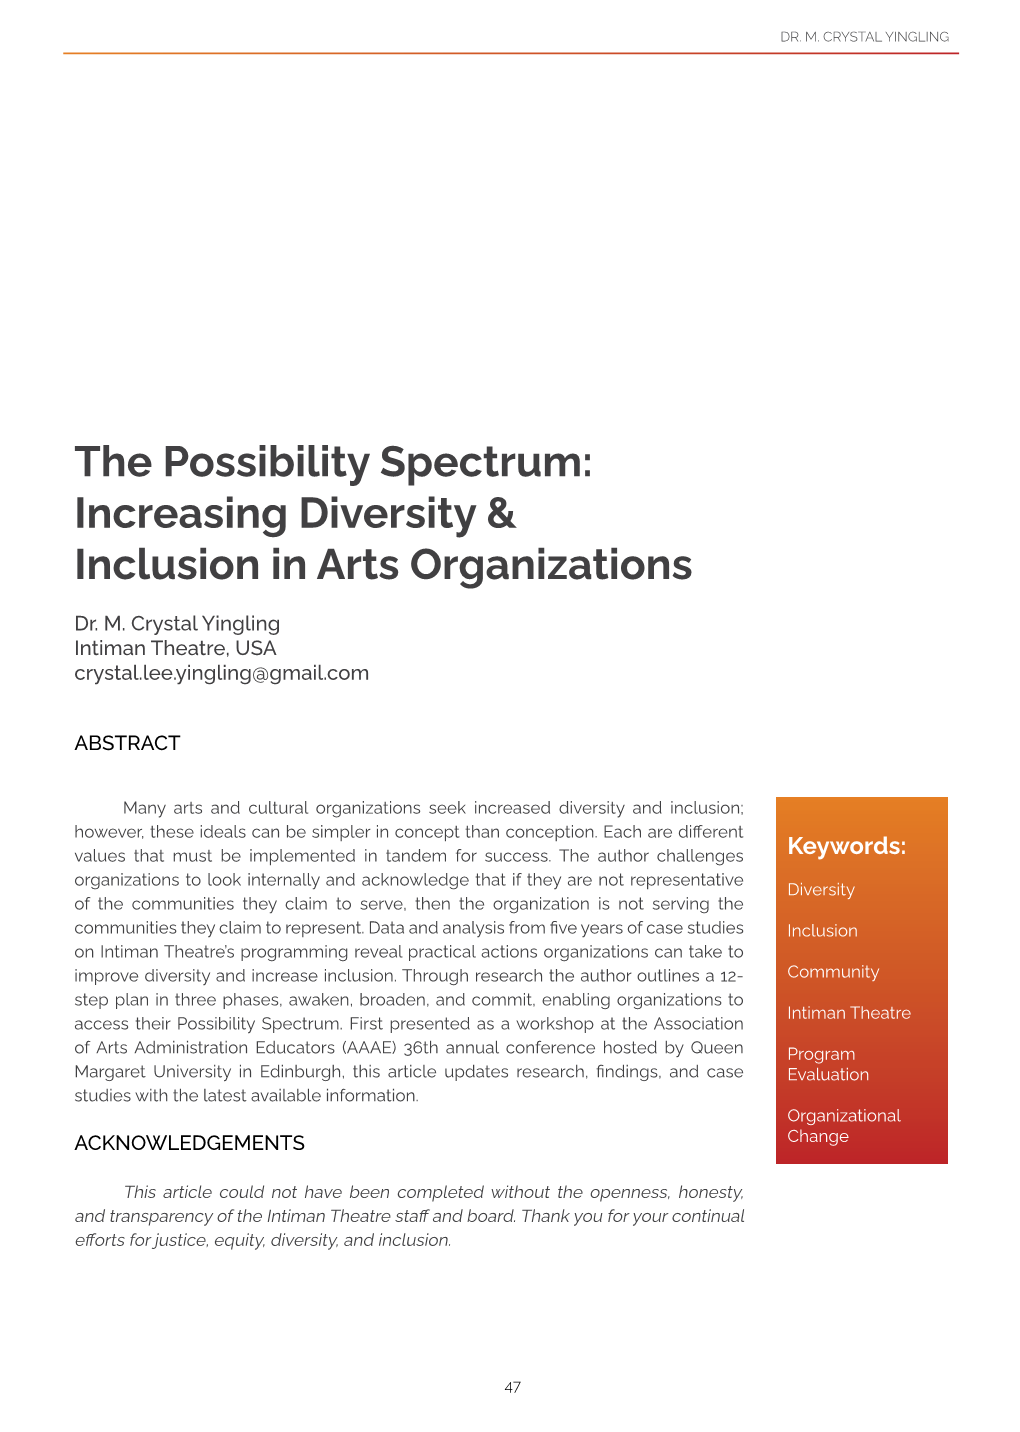 Increasing Diversity & Inclusion in Arts Organizations